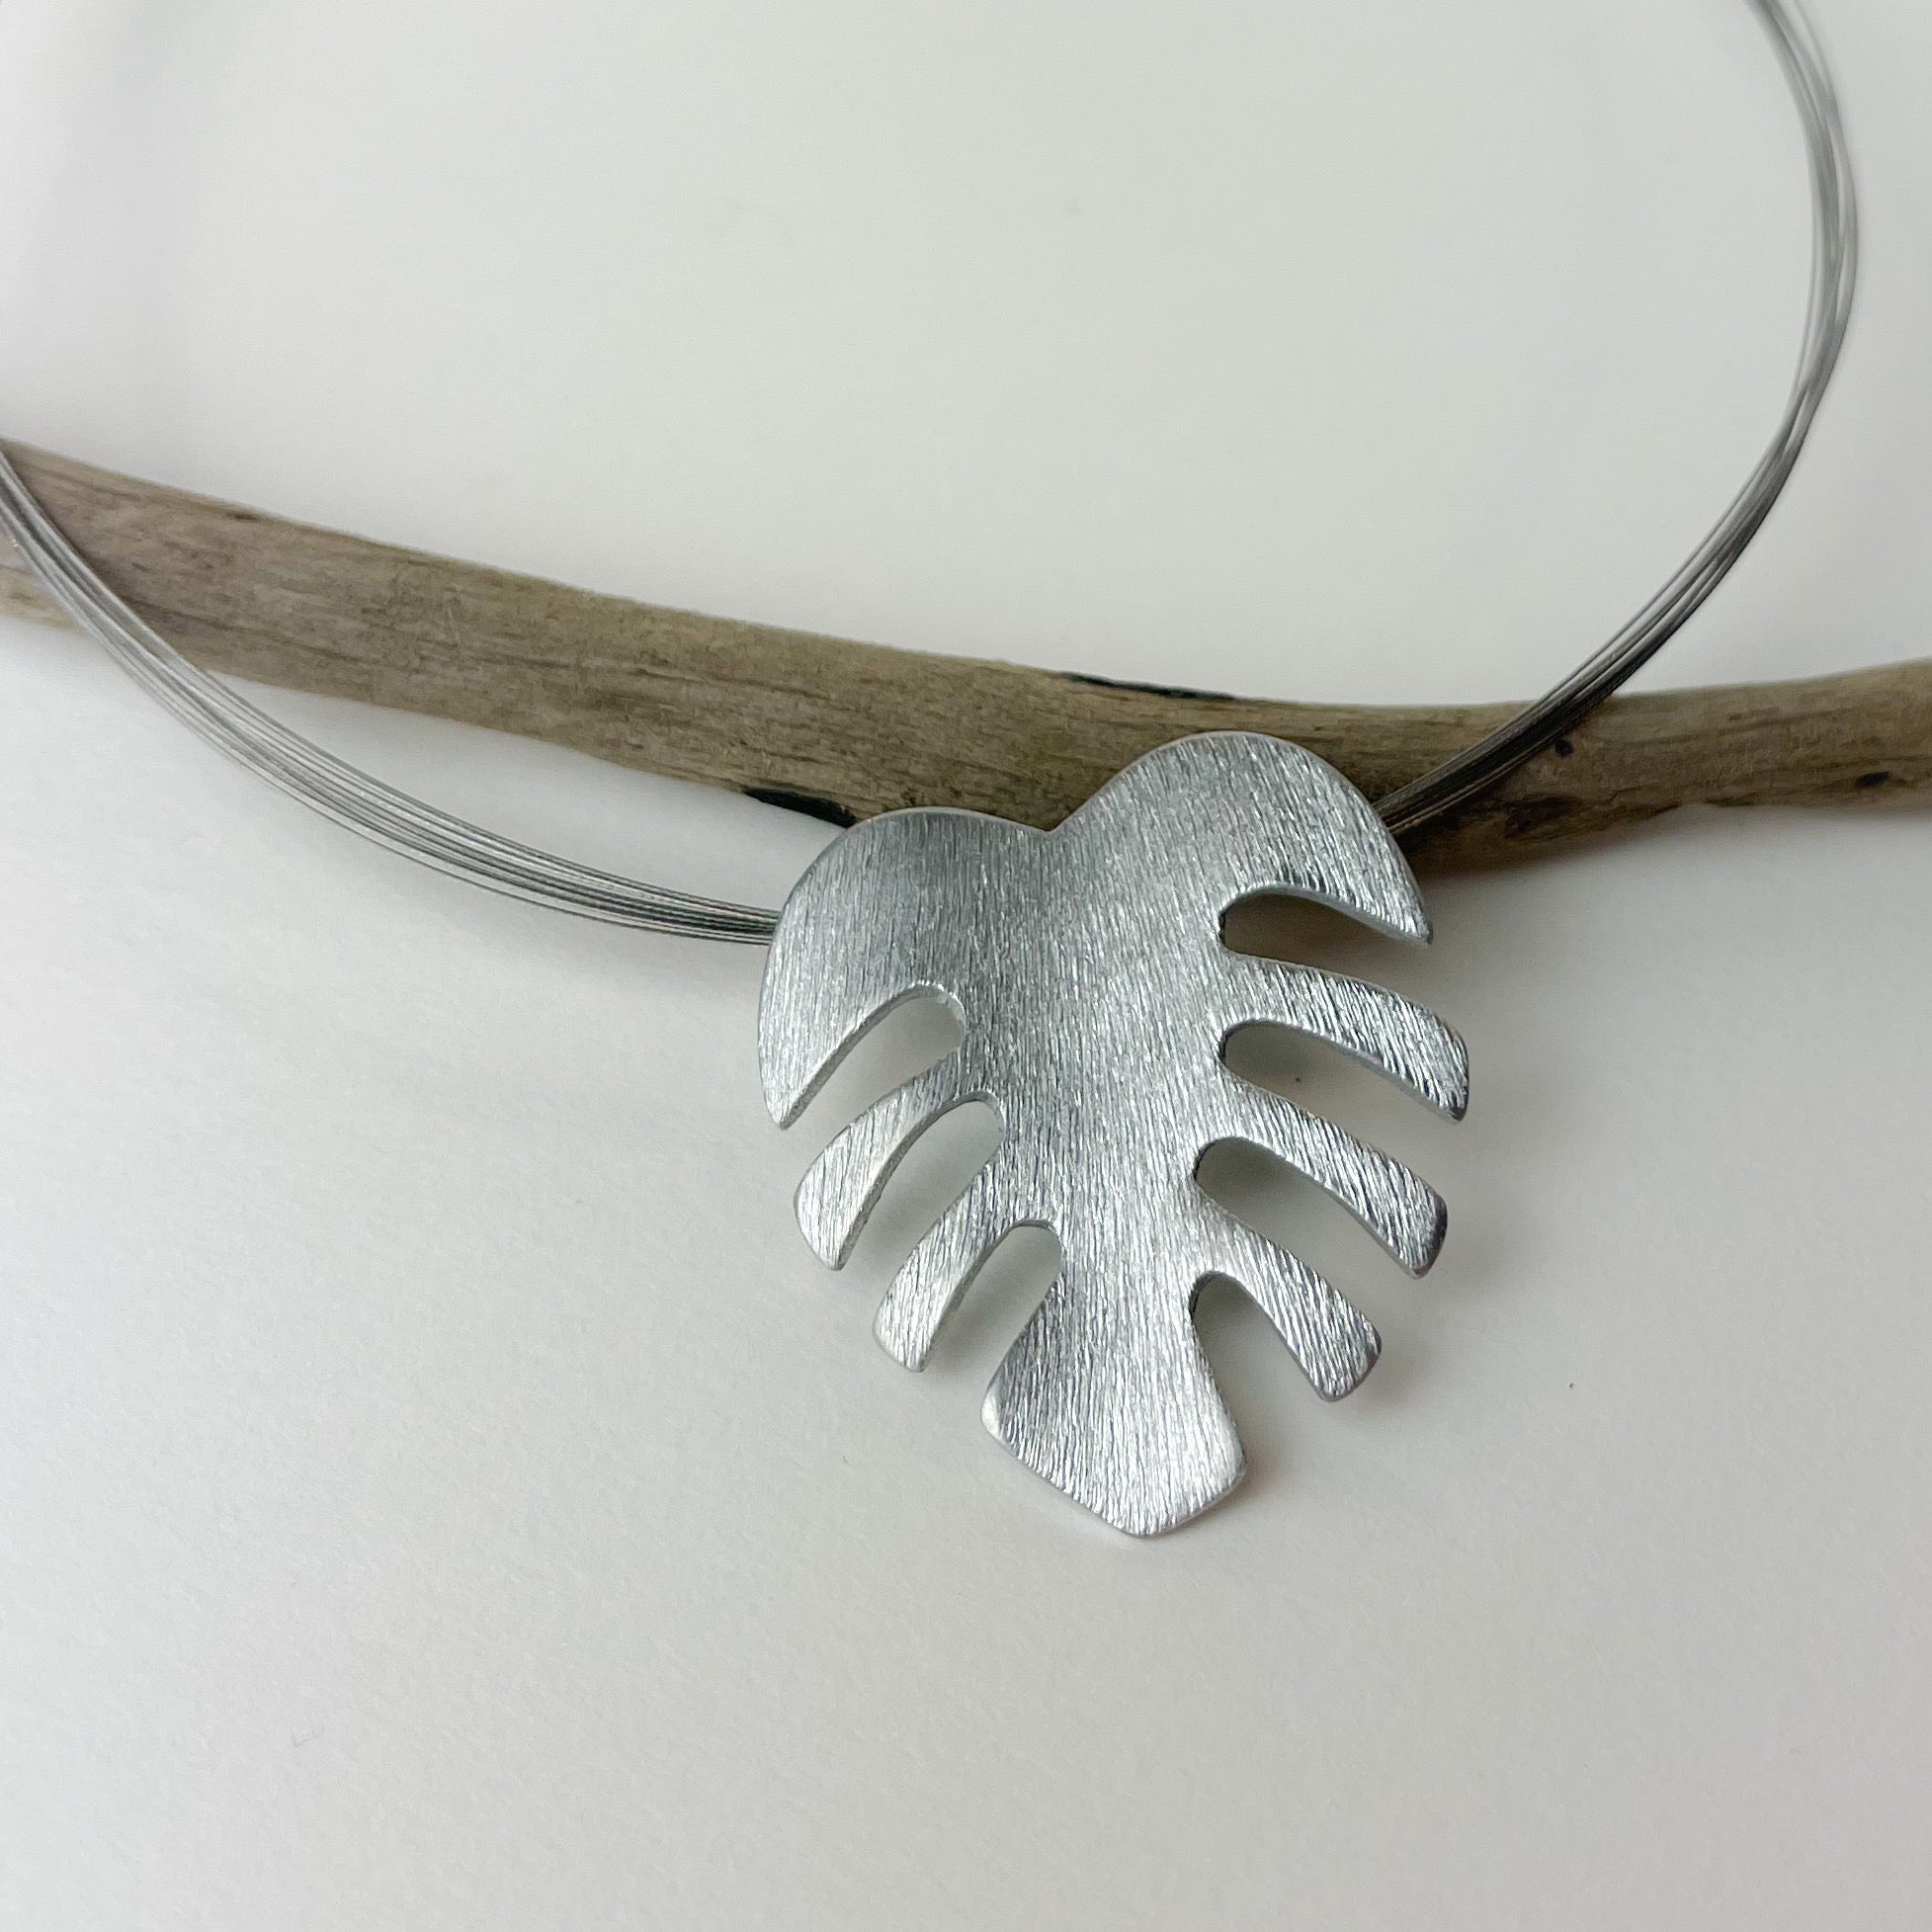 Silver Palm Leaf Necklace - The Nancy Smillie Shop - Art, Jewellery & Designer Gifts Glasgow